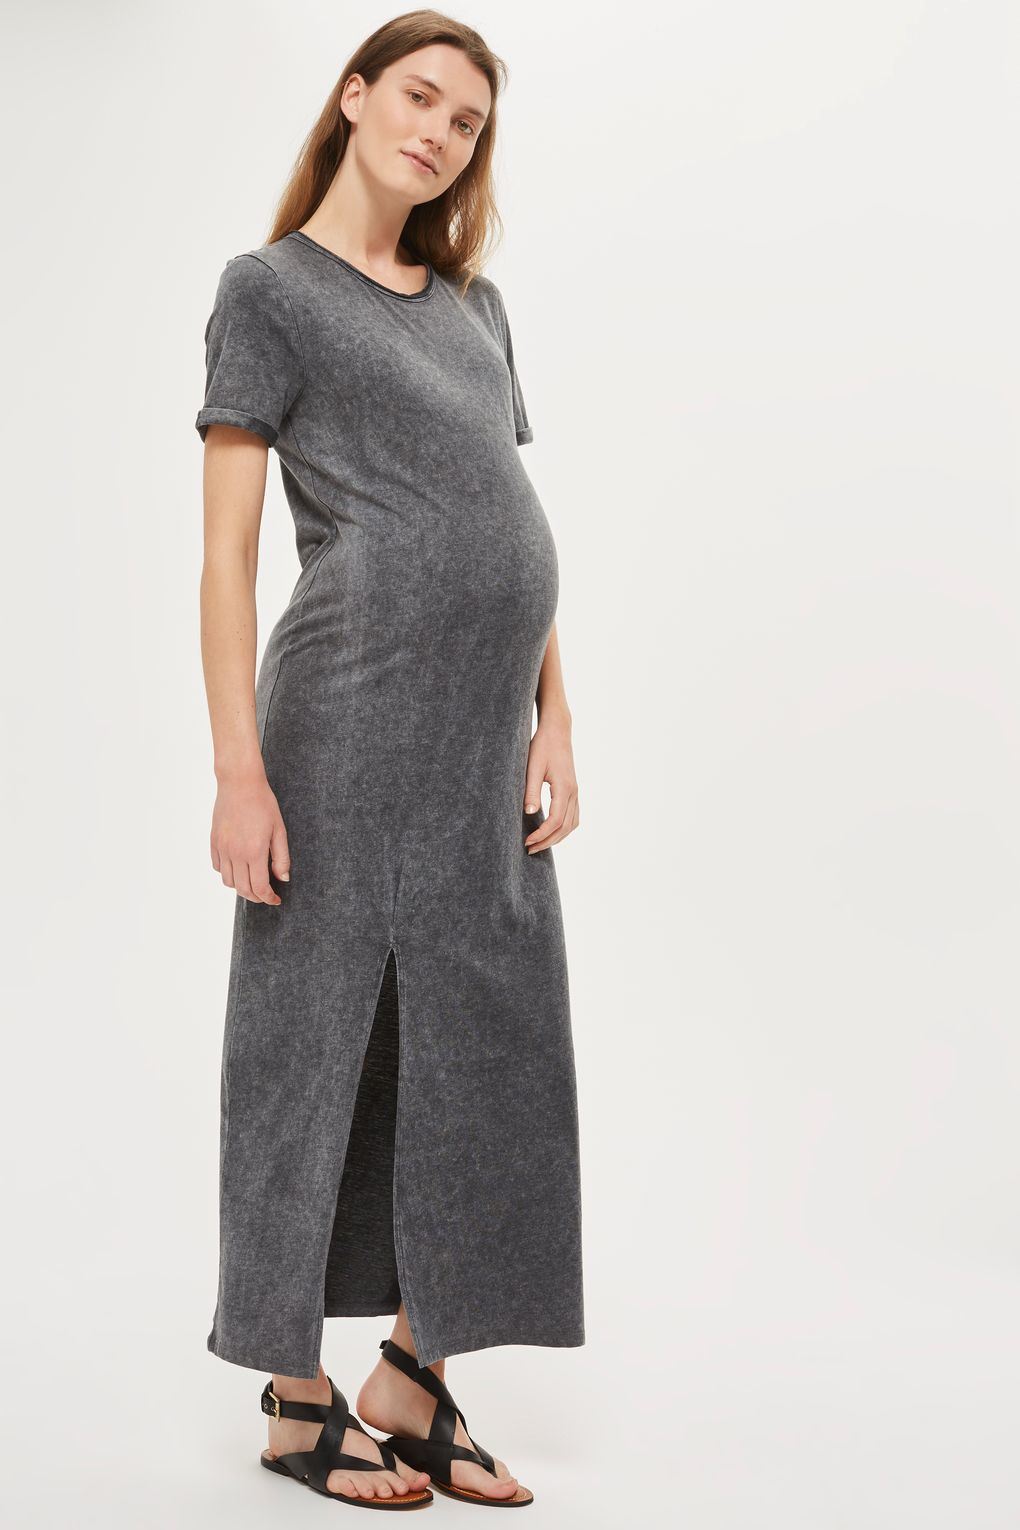 2017 New Fashion Women Maternity Washed Split Front Maxi Dress